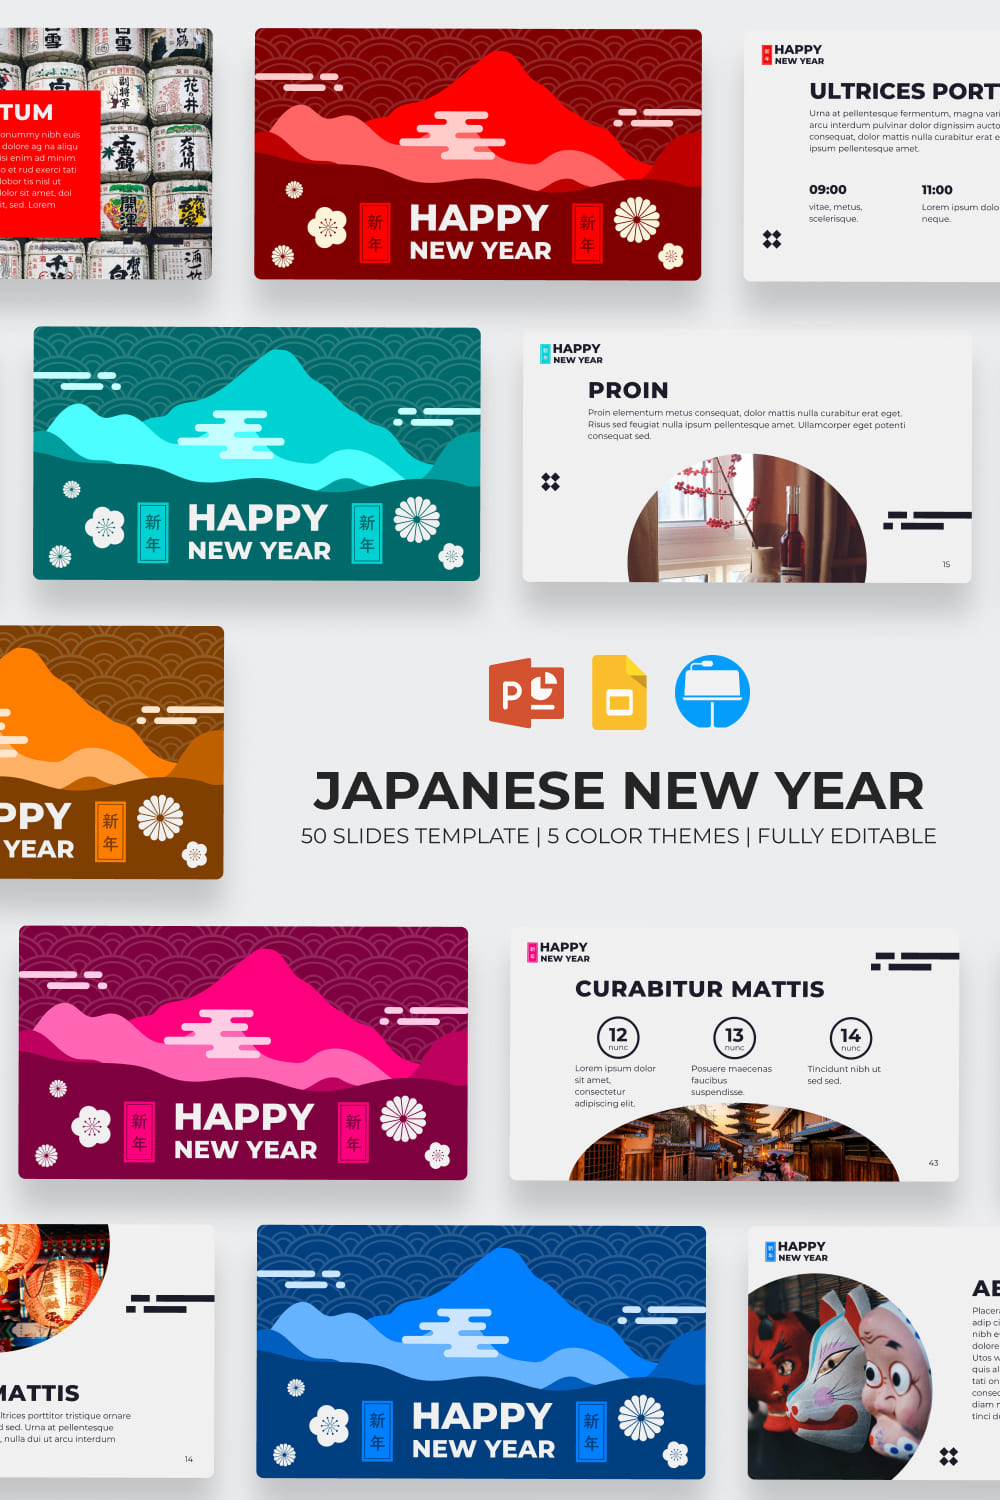 Japan New Year Presentation Template.